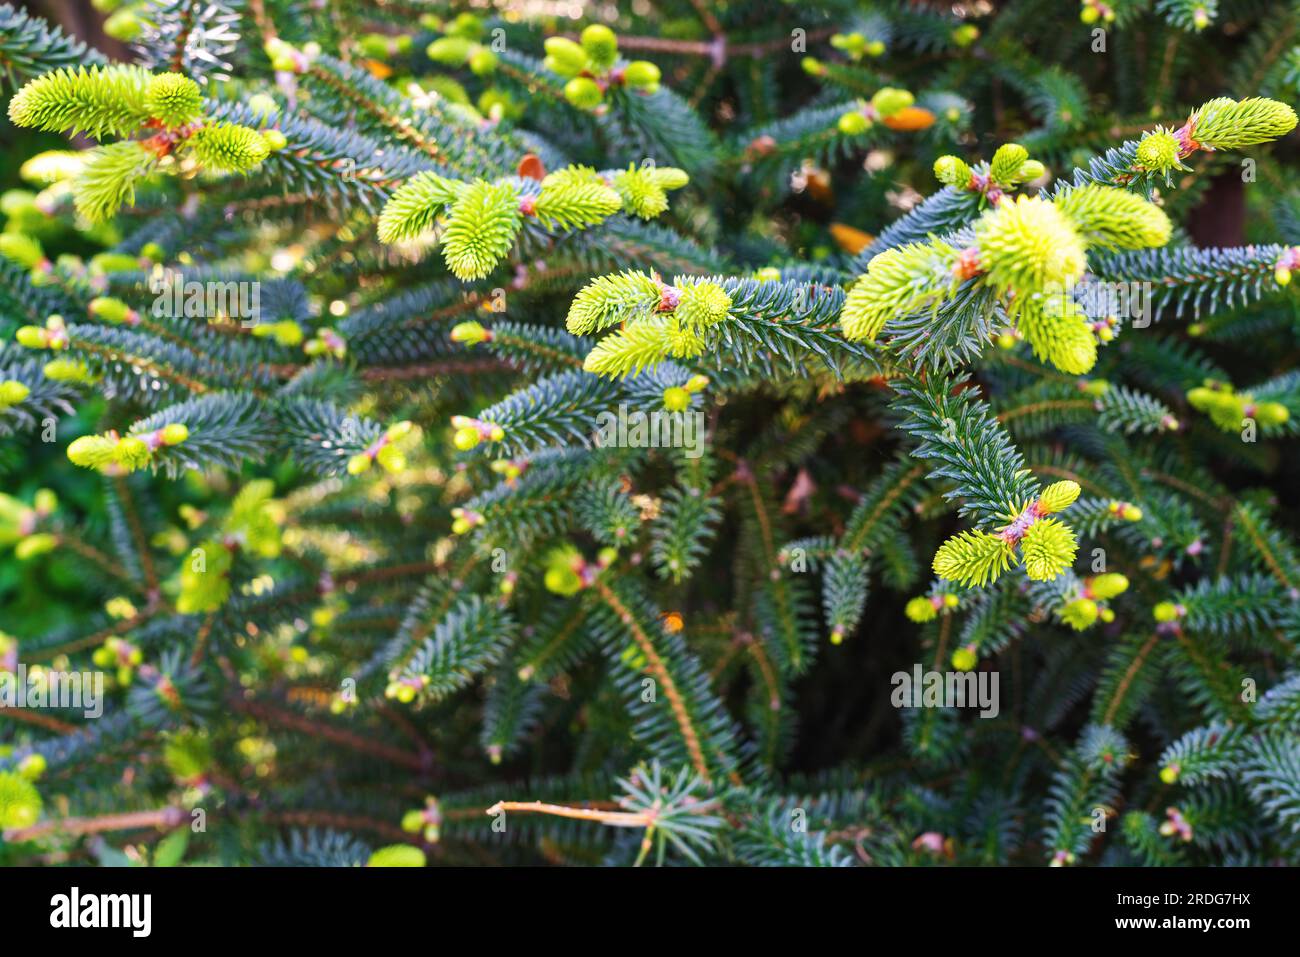 Branches and Needles of Spanish fir tree or Pinsapo (abies pinsapo) - Zahara de la Sierra, Andalusia, Spain Stock Photo